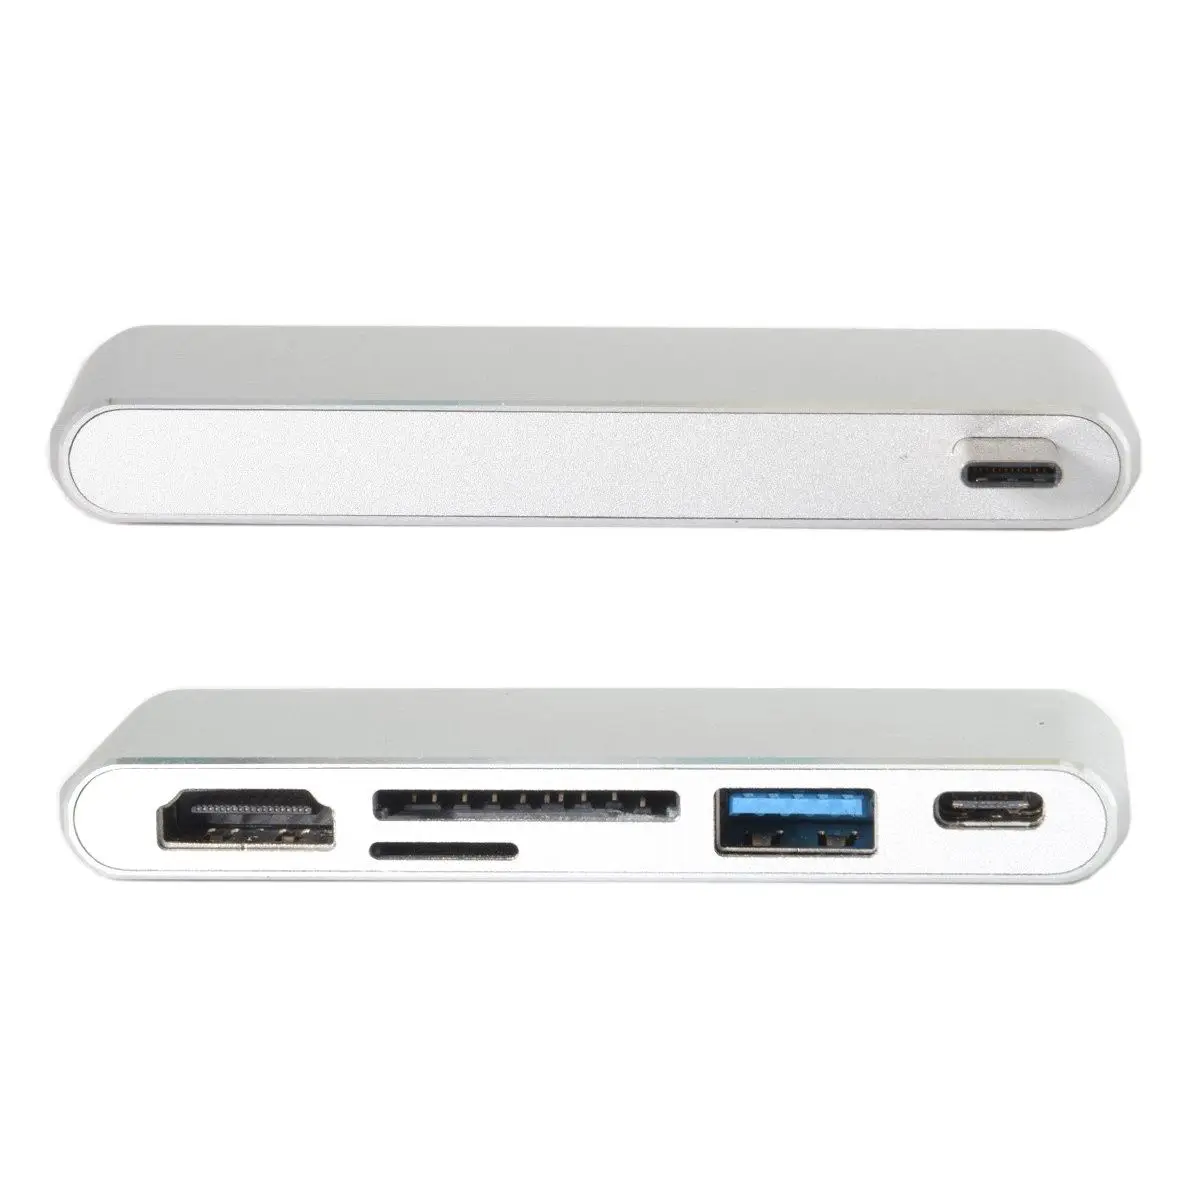 Thunderbolt3 тип c USB C к HDMI и USB3.0 OTG SD TF карта питание для ноутбуков Macbook|Адаптеры Thunderbolt 3| |